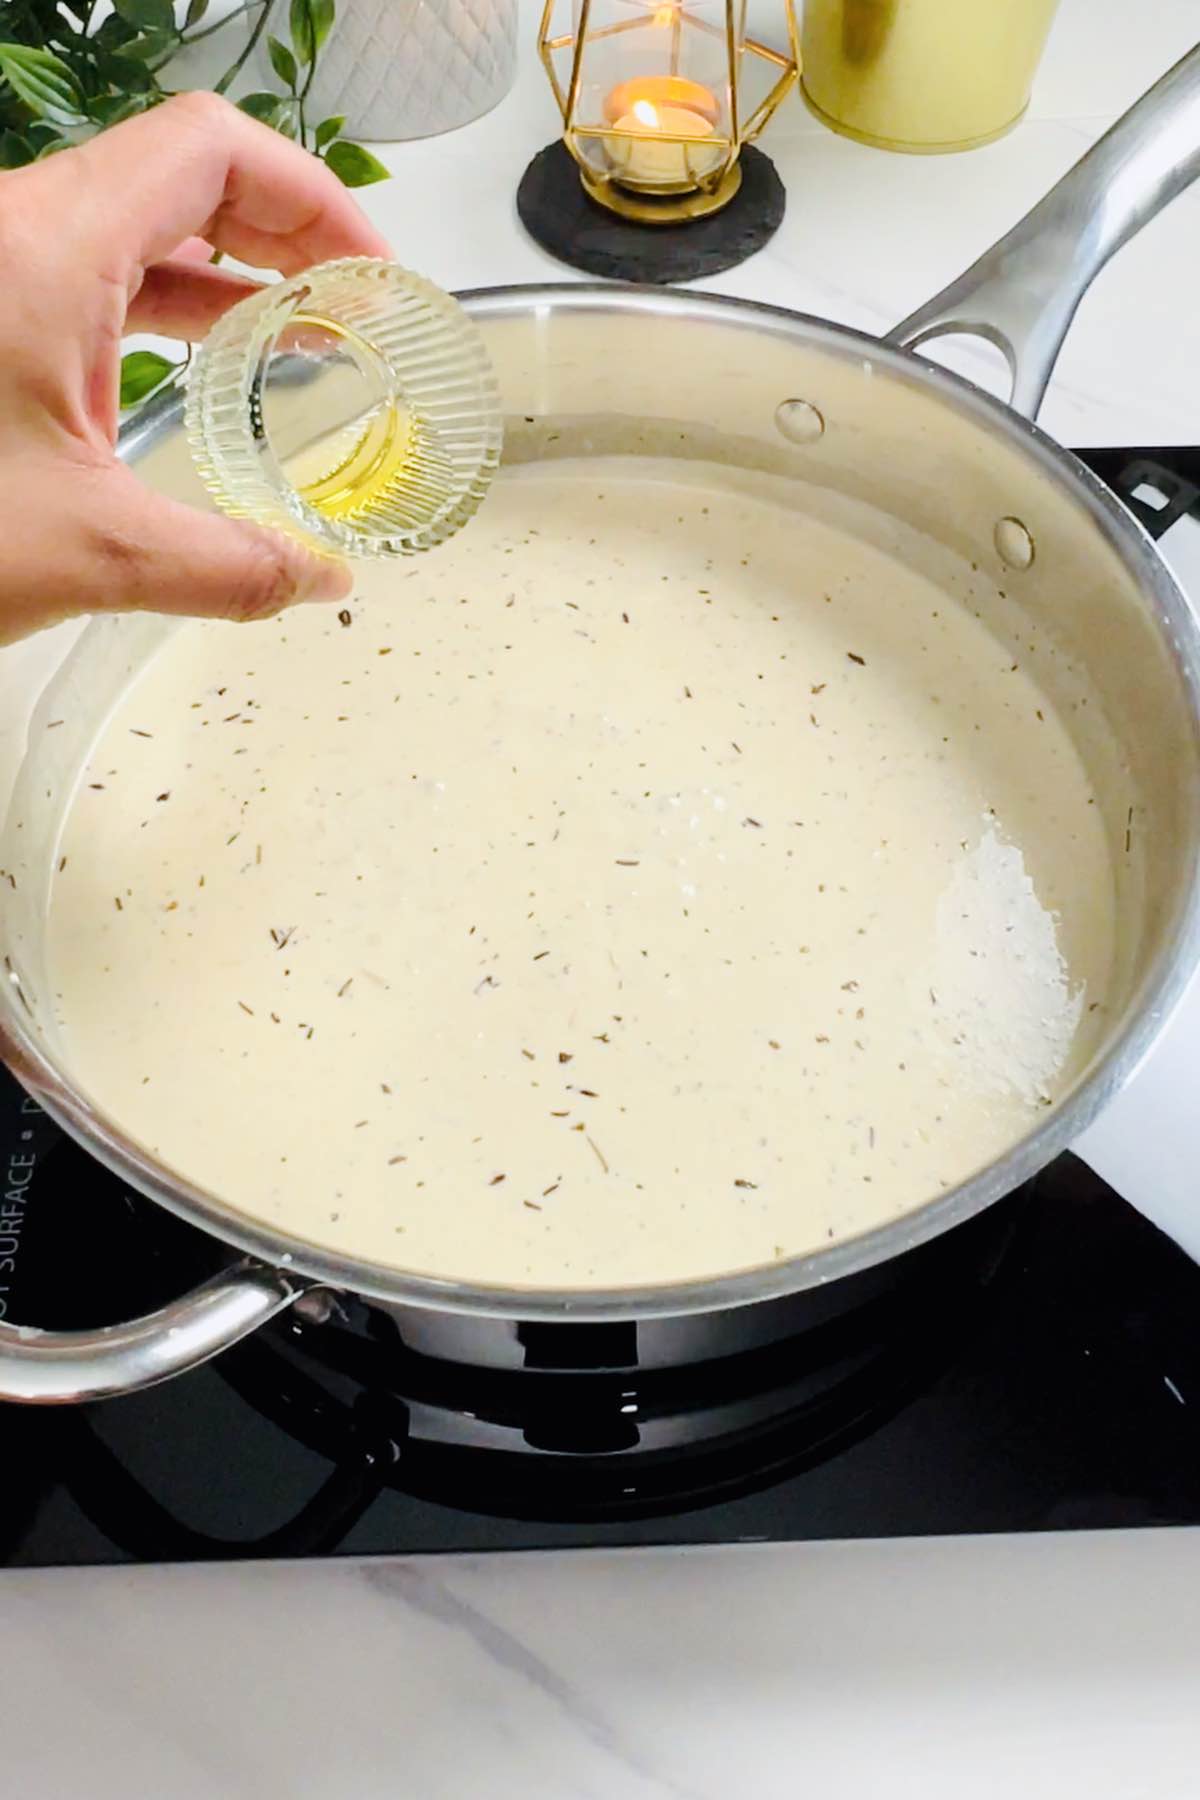 adding truffle oil to the cream sauce